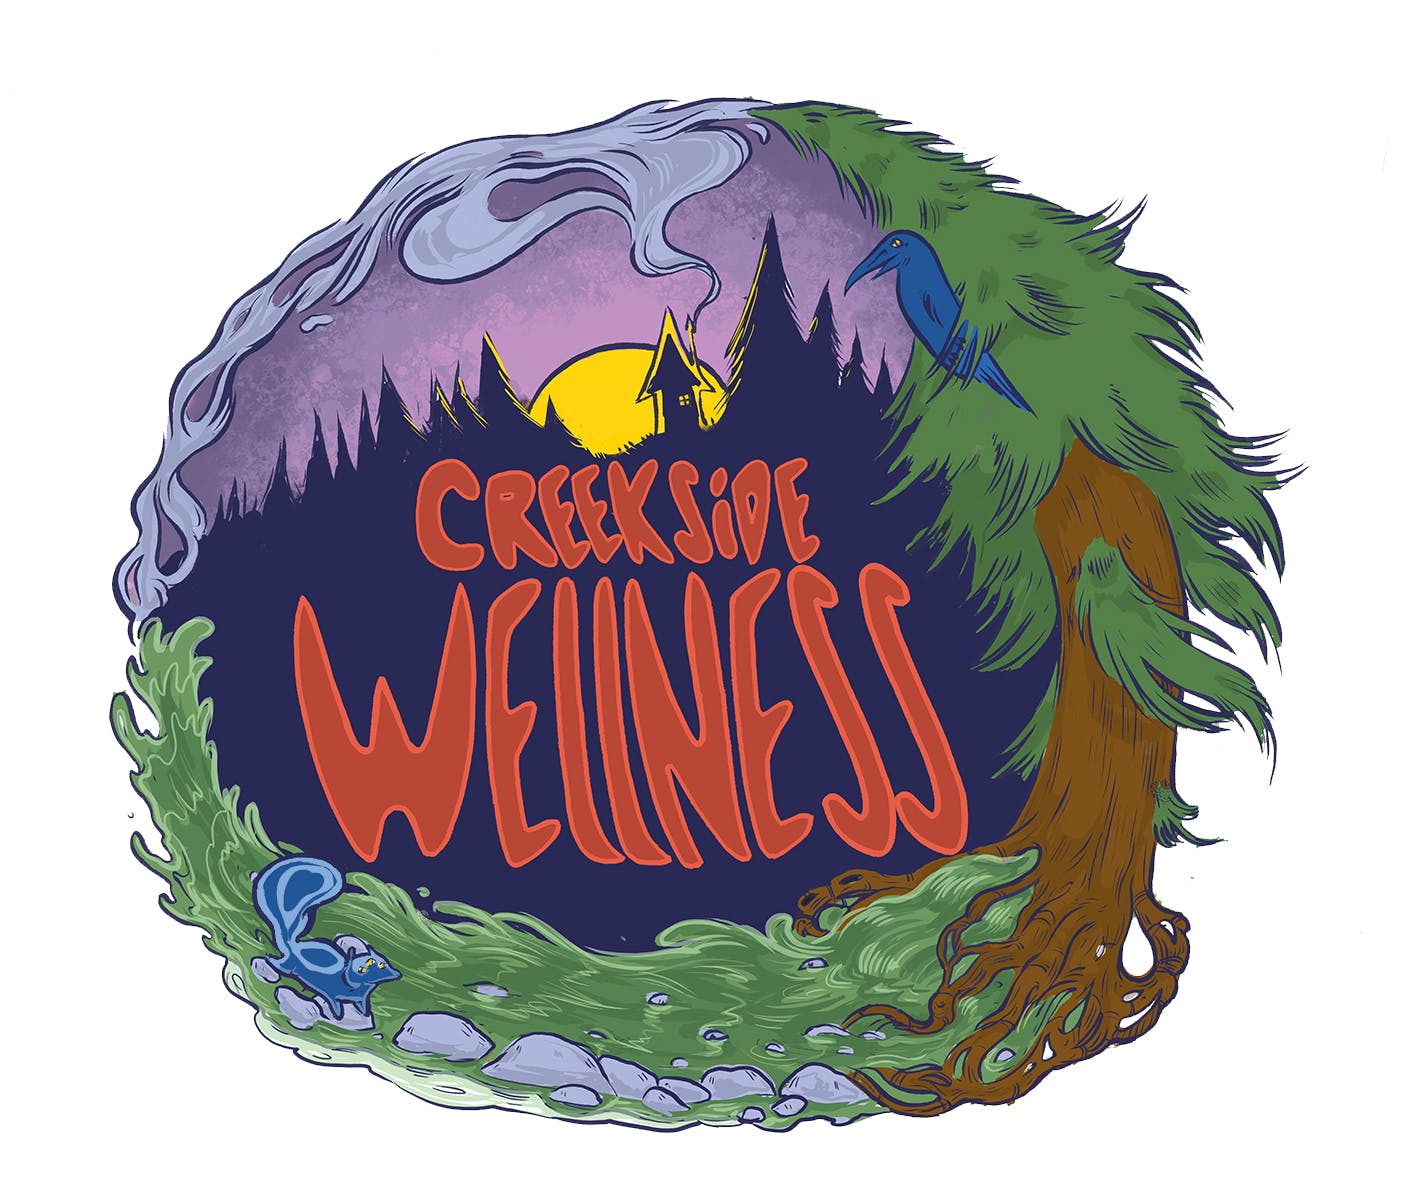 Creekside Wellness - Medical Marijuana Doctors - Cannabizme.com